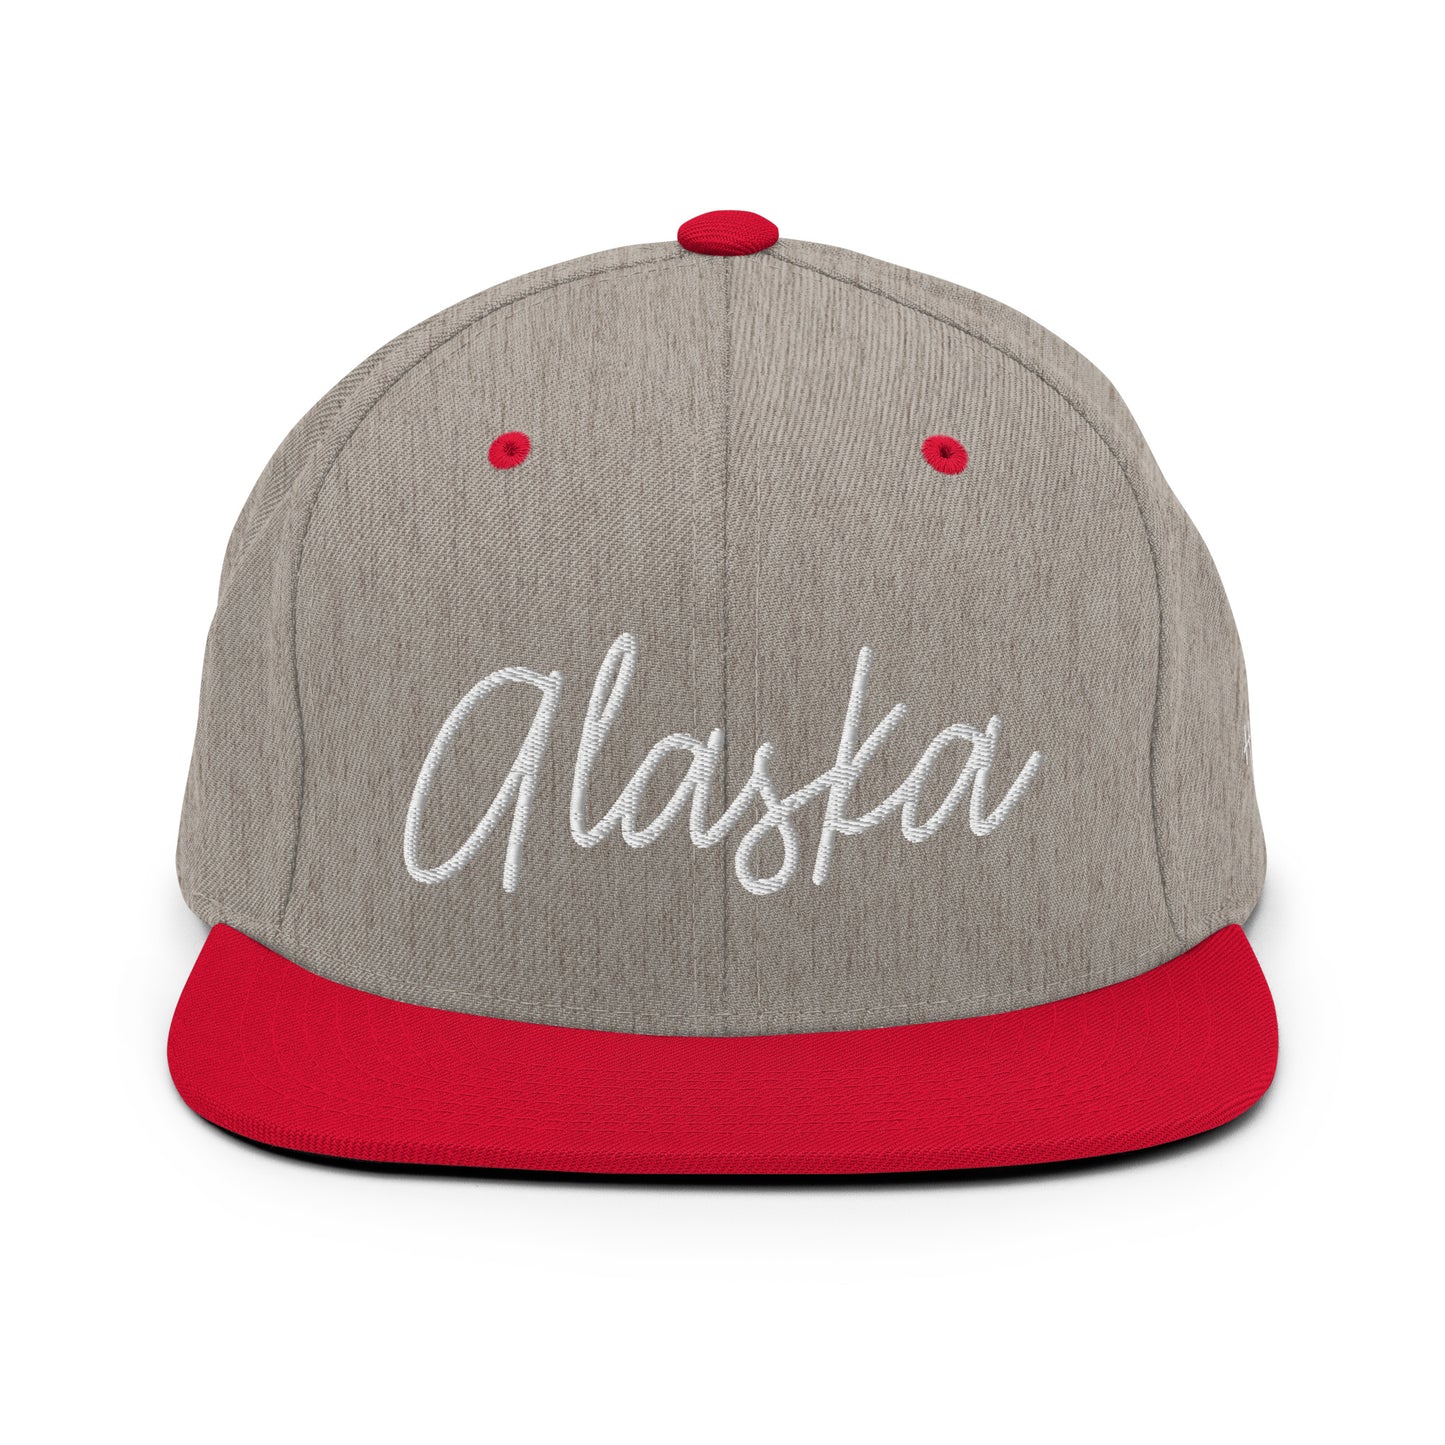 Alaska Retro Script 6 Panel Snapback Hat